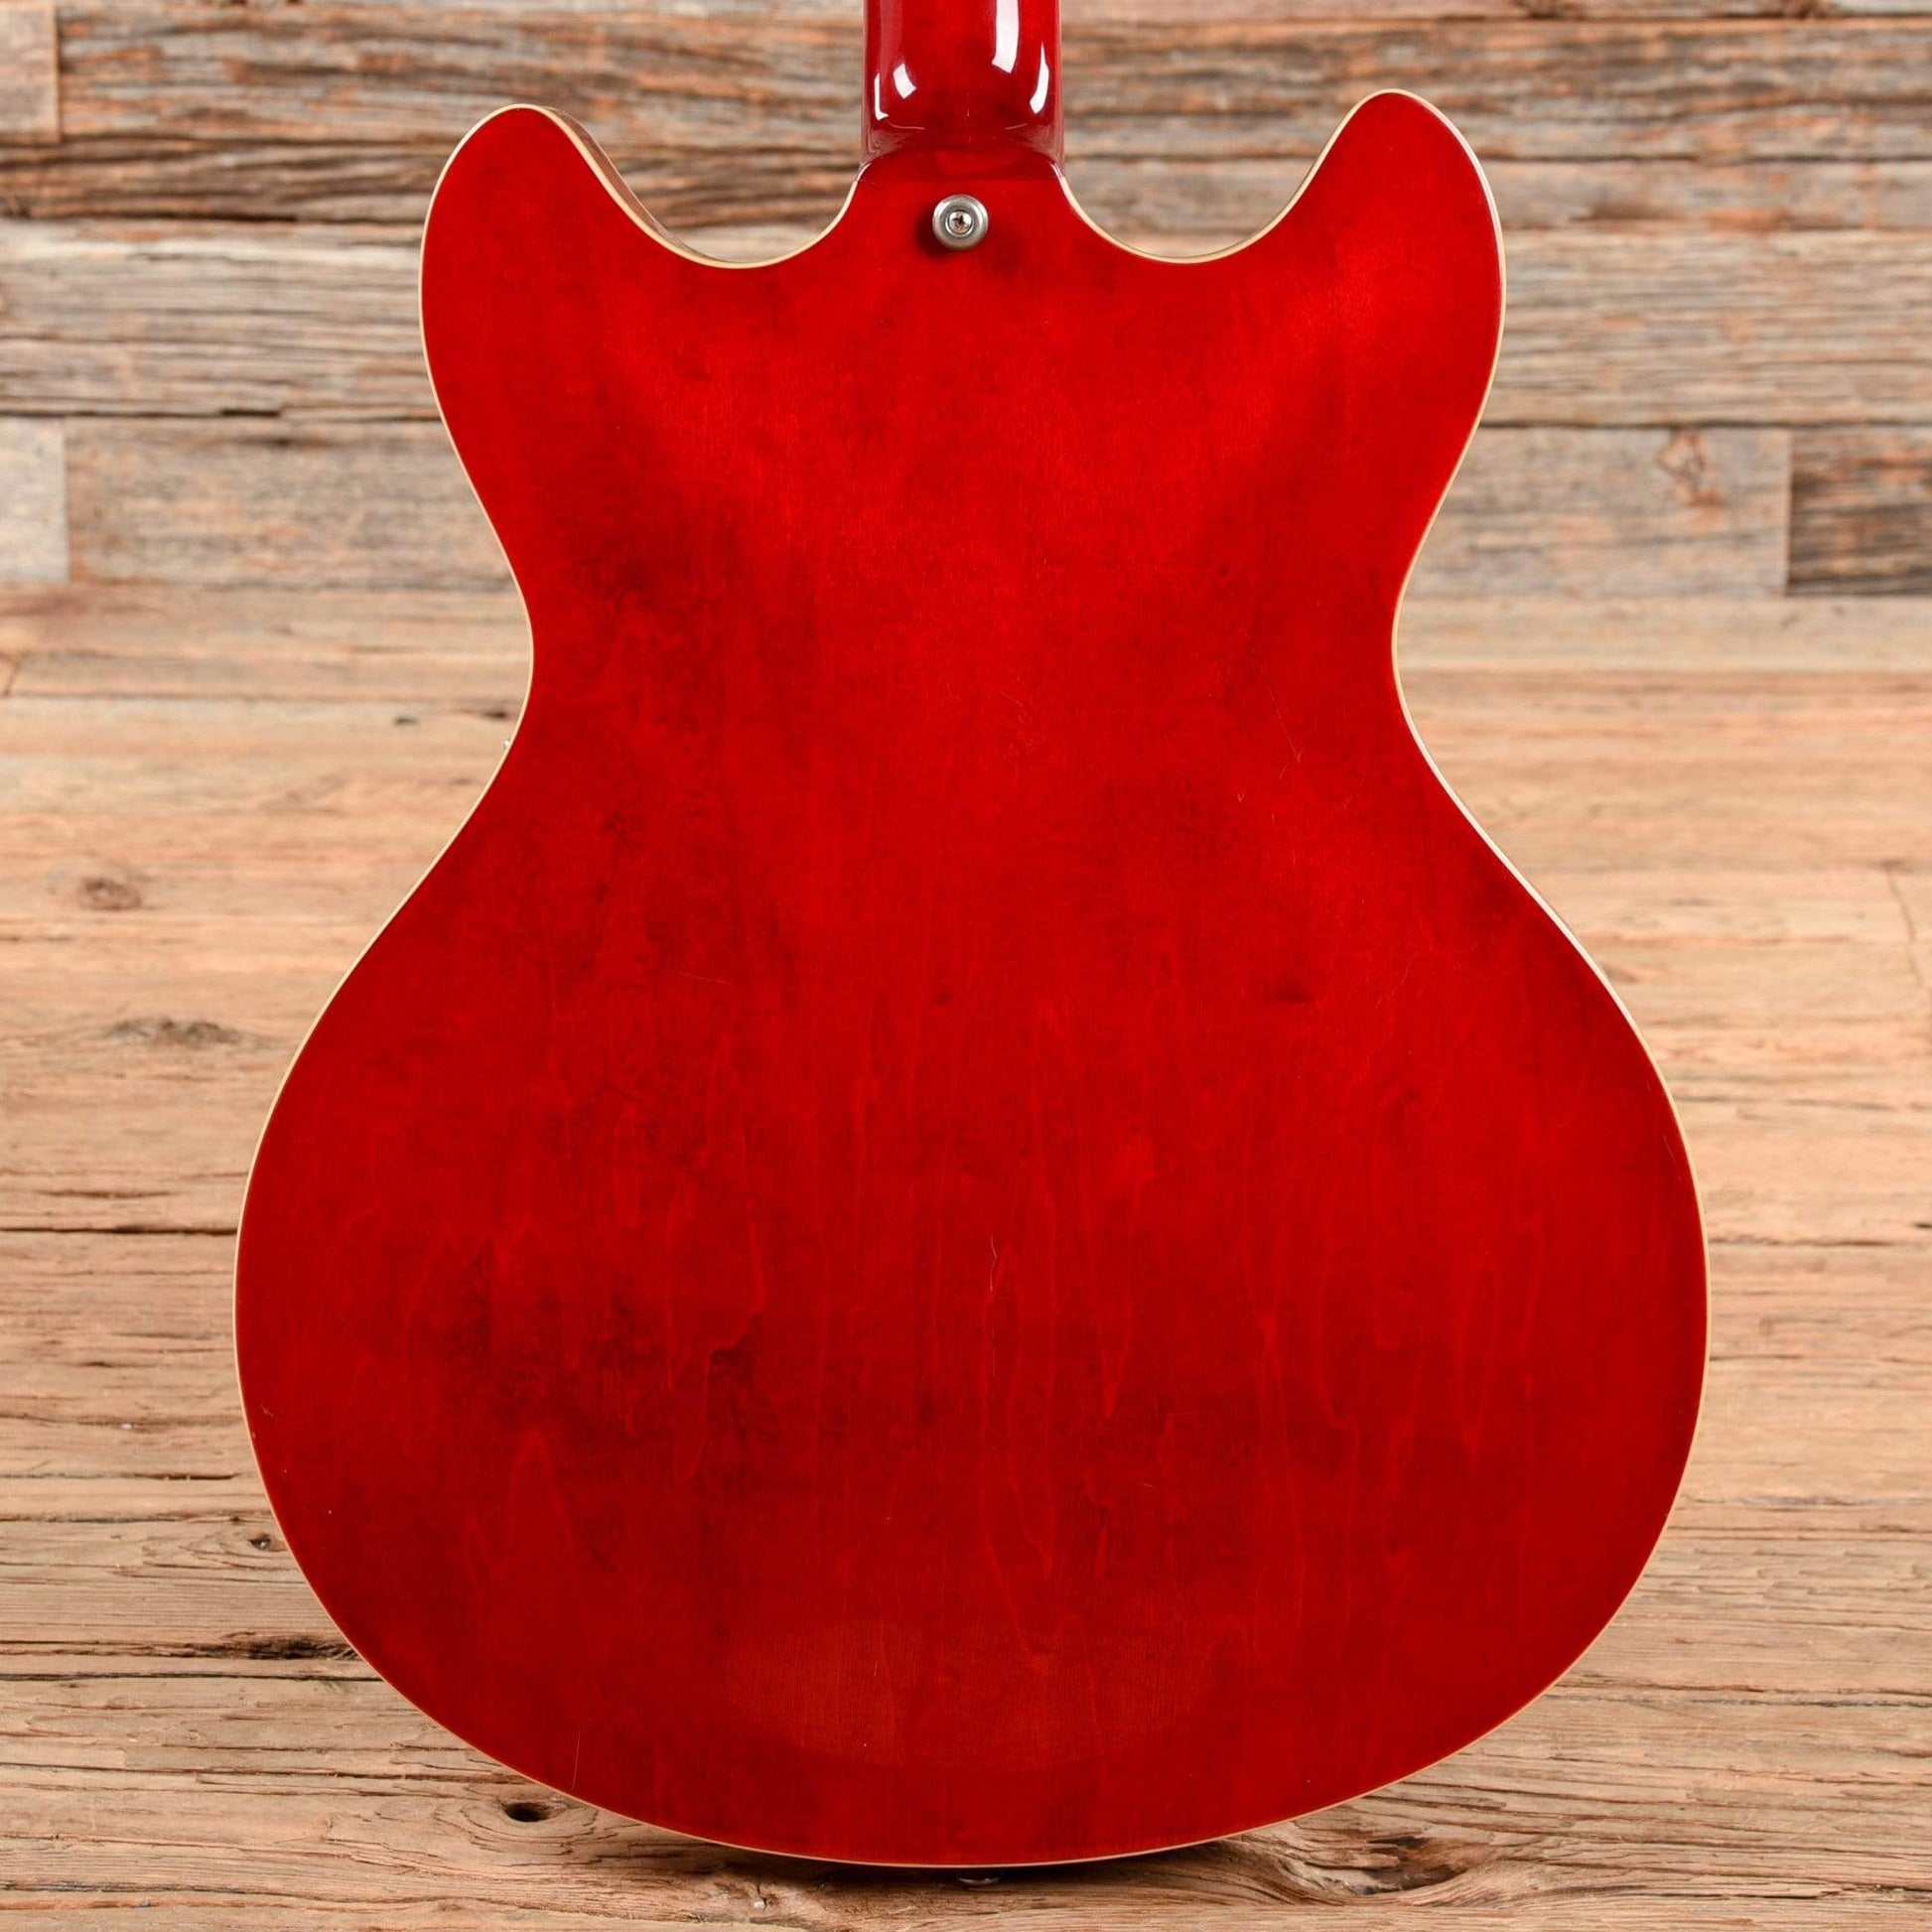 Washburn HB30 Cherry Electric Guitars / Semi-Hollow